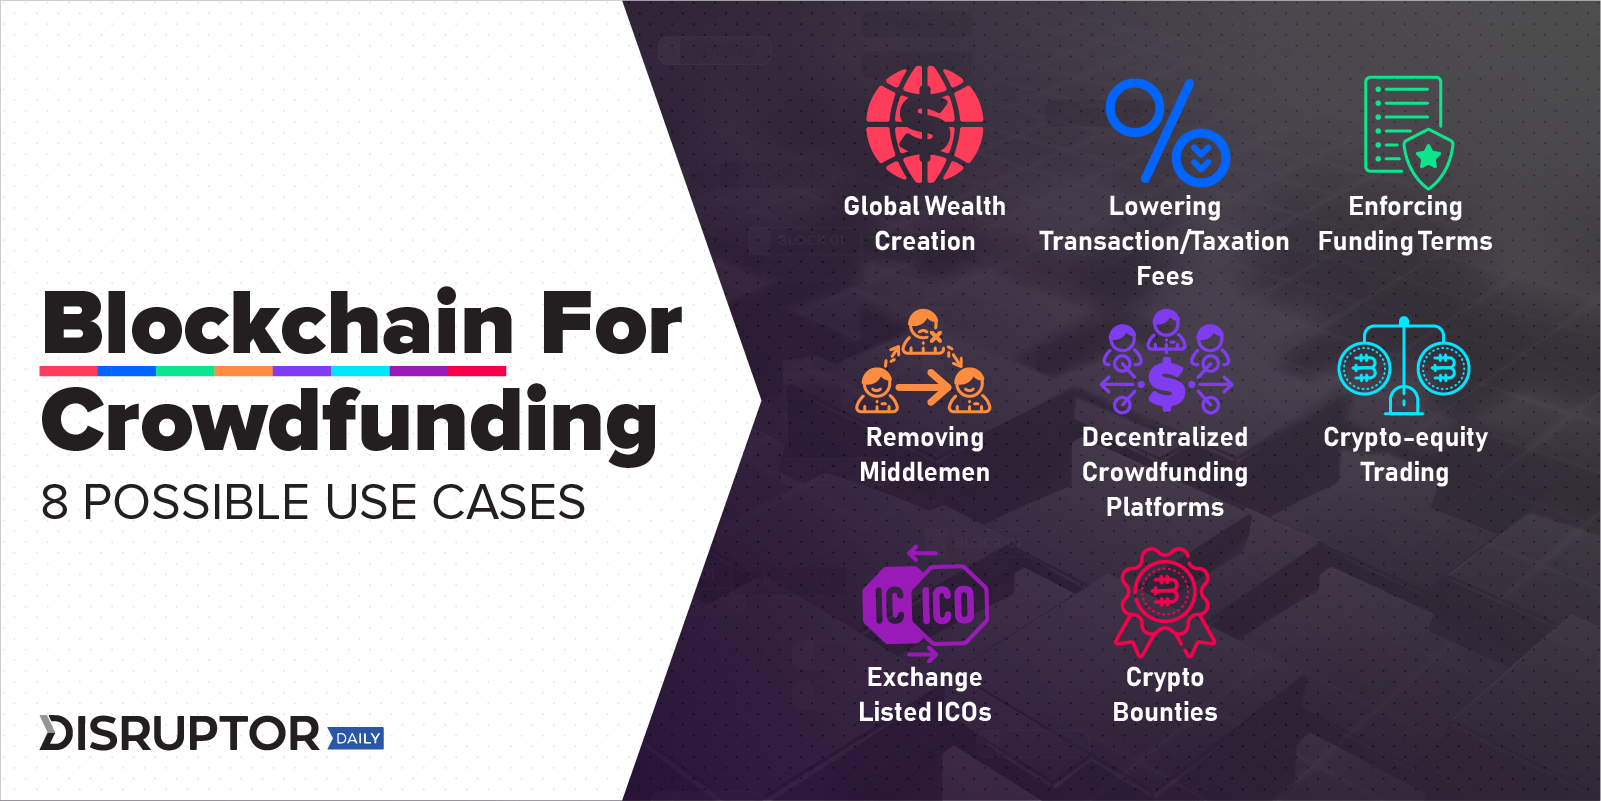 Blockchain for crowdfunding market